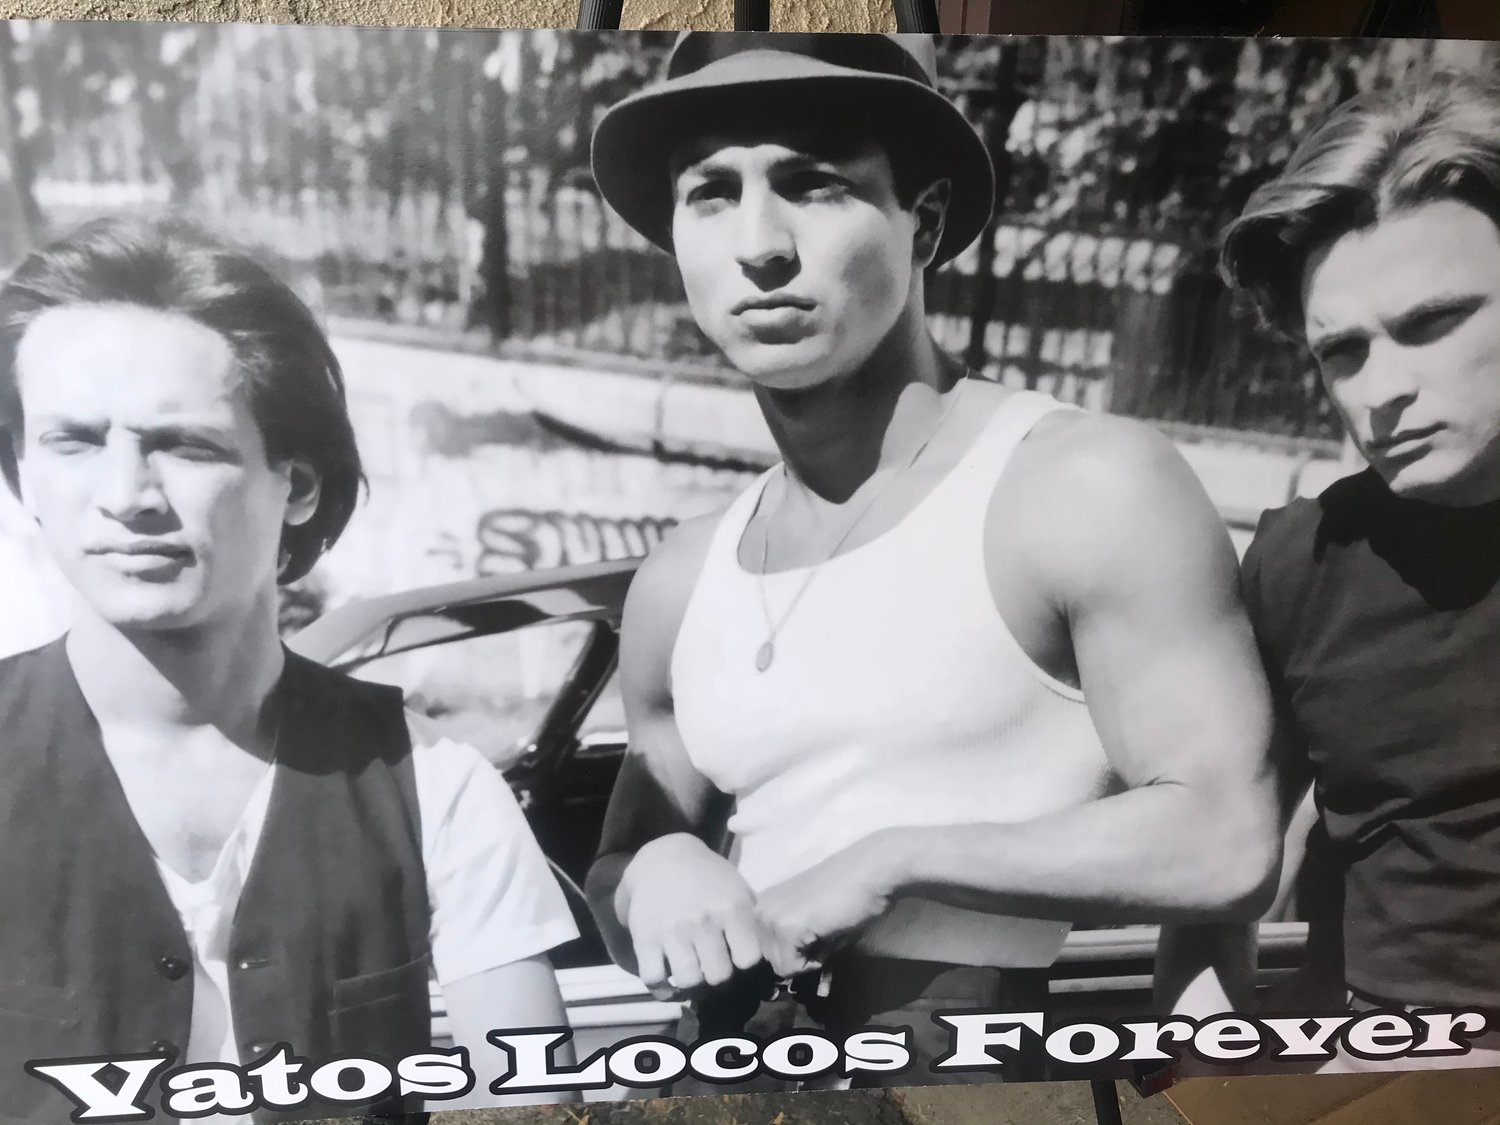 Image of Vatos Locos Forever